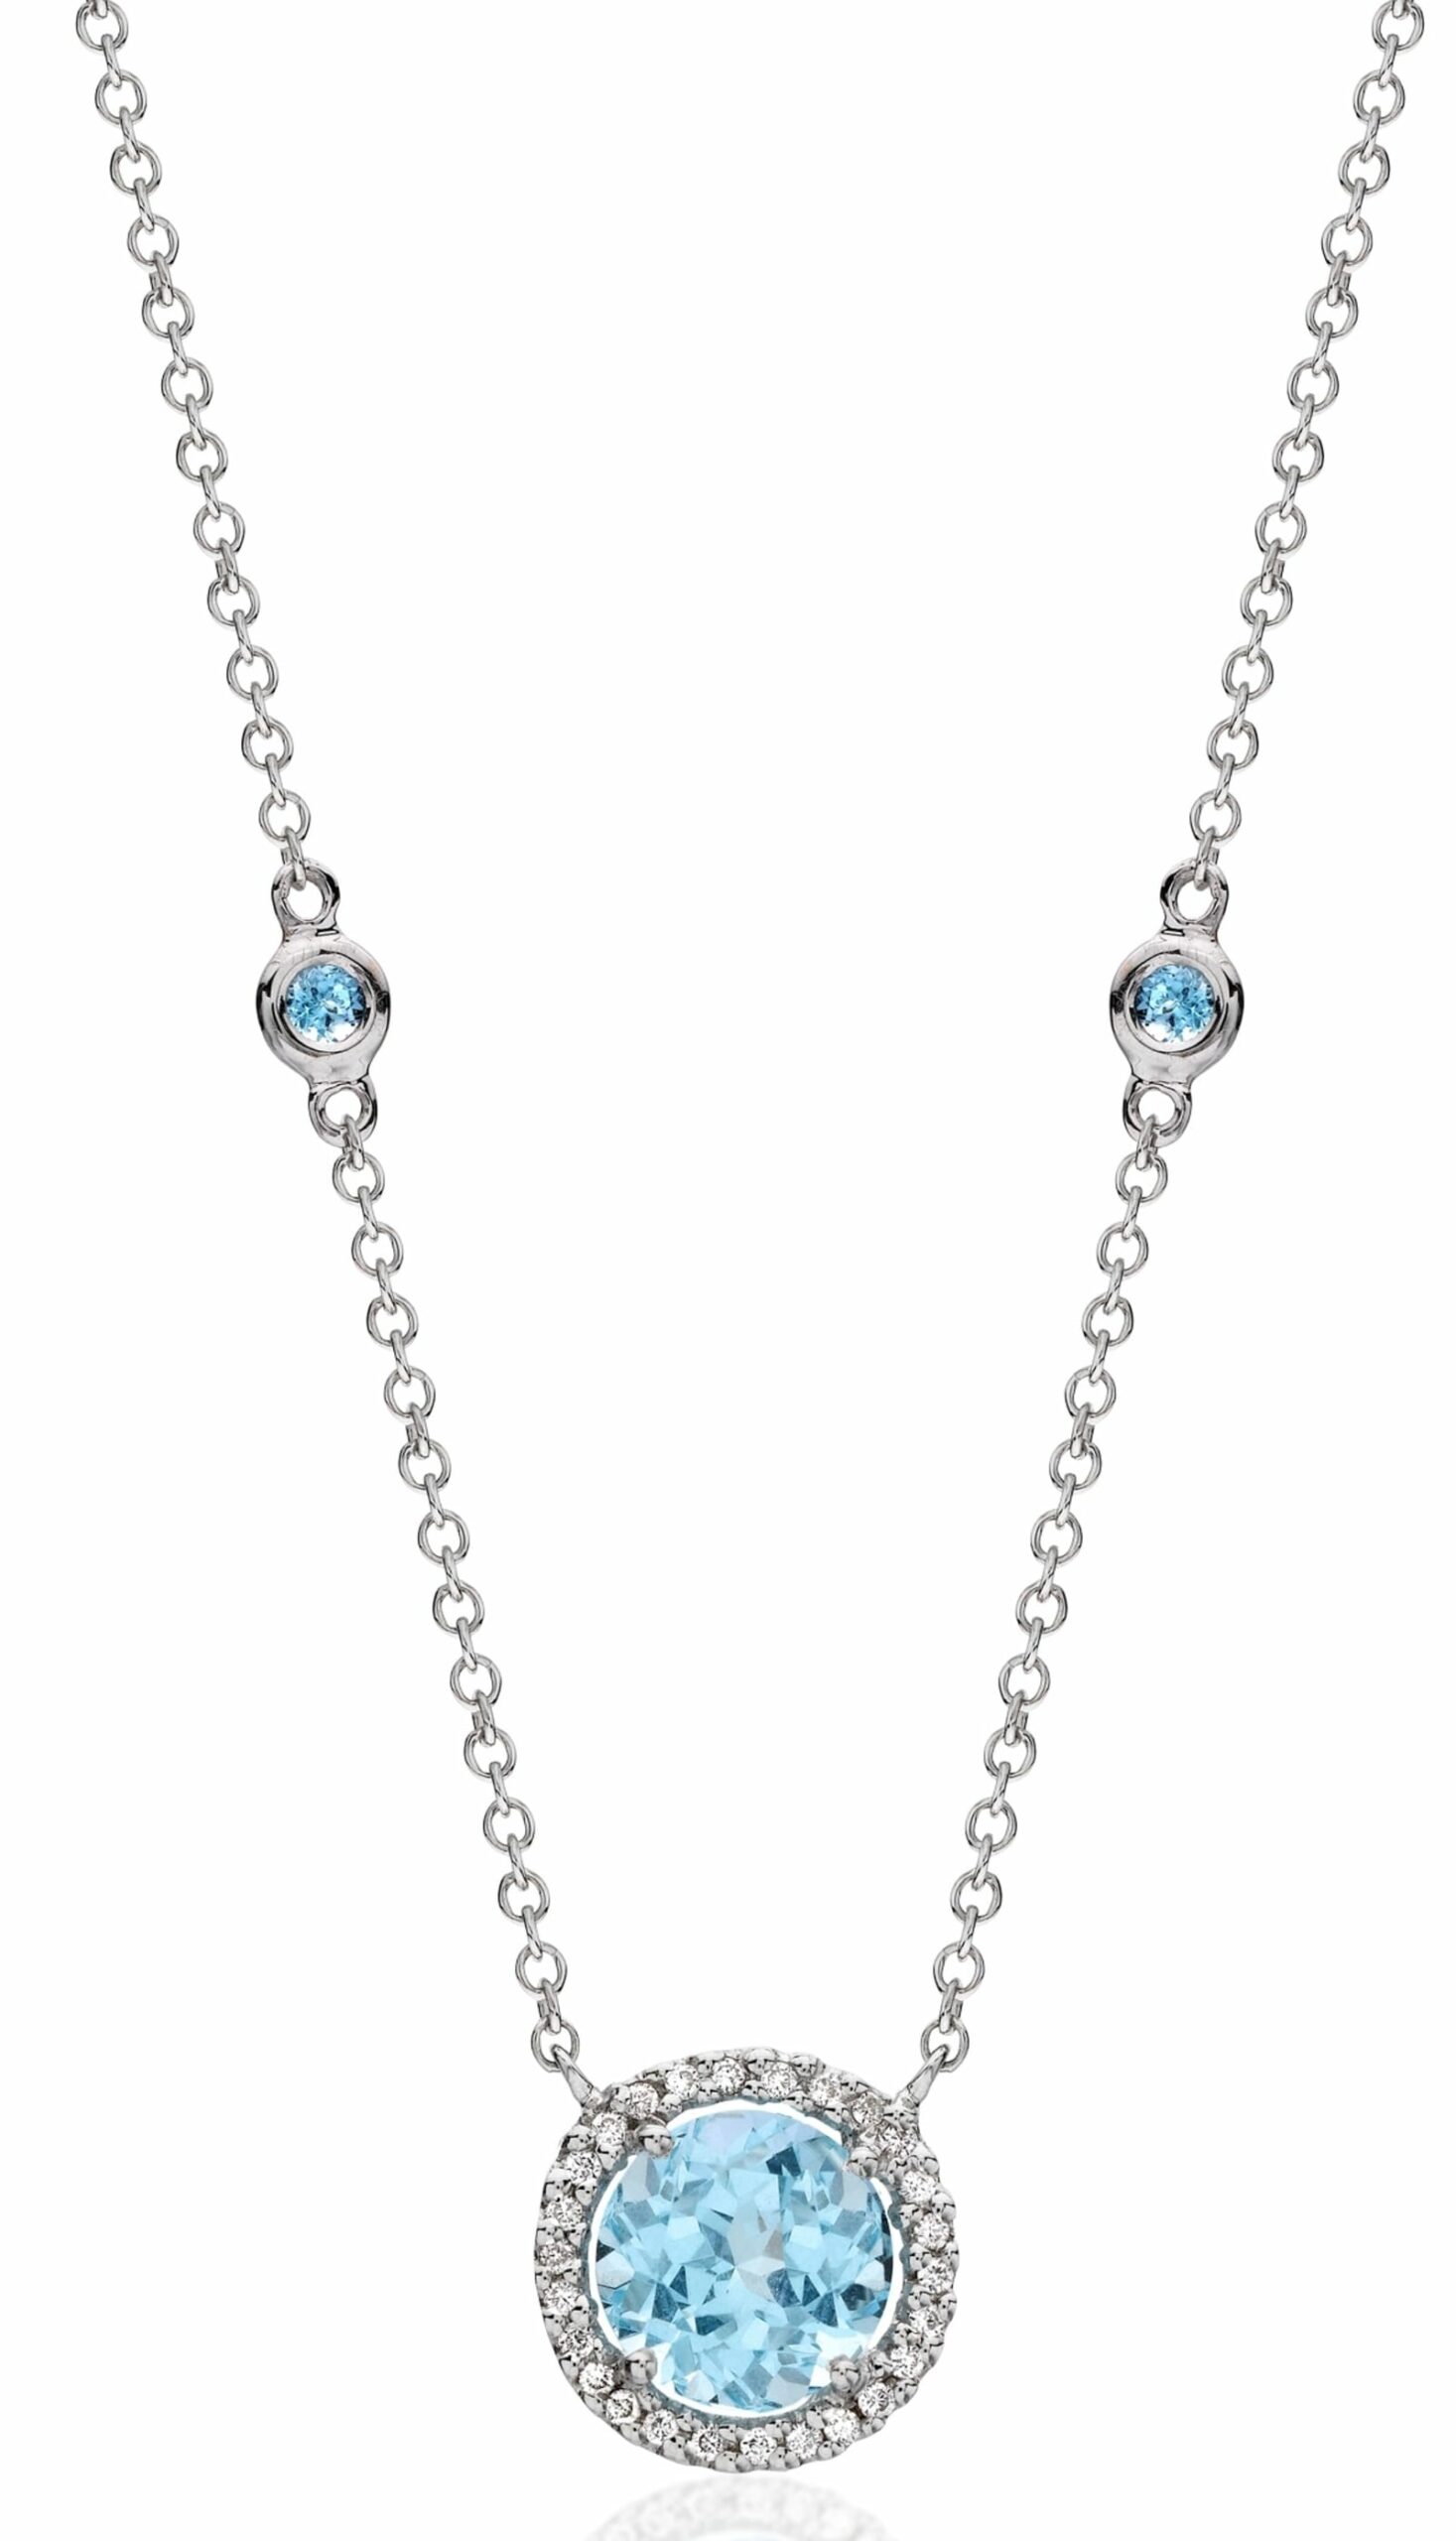 bridebook.co.uk-kiki mcdonough's blue topaz pendant